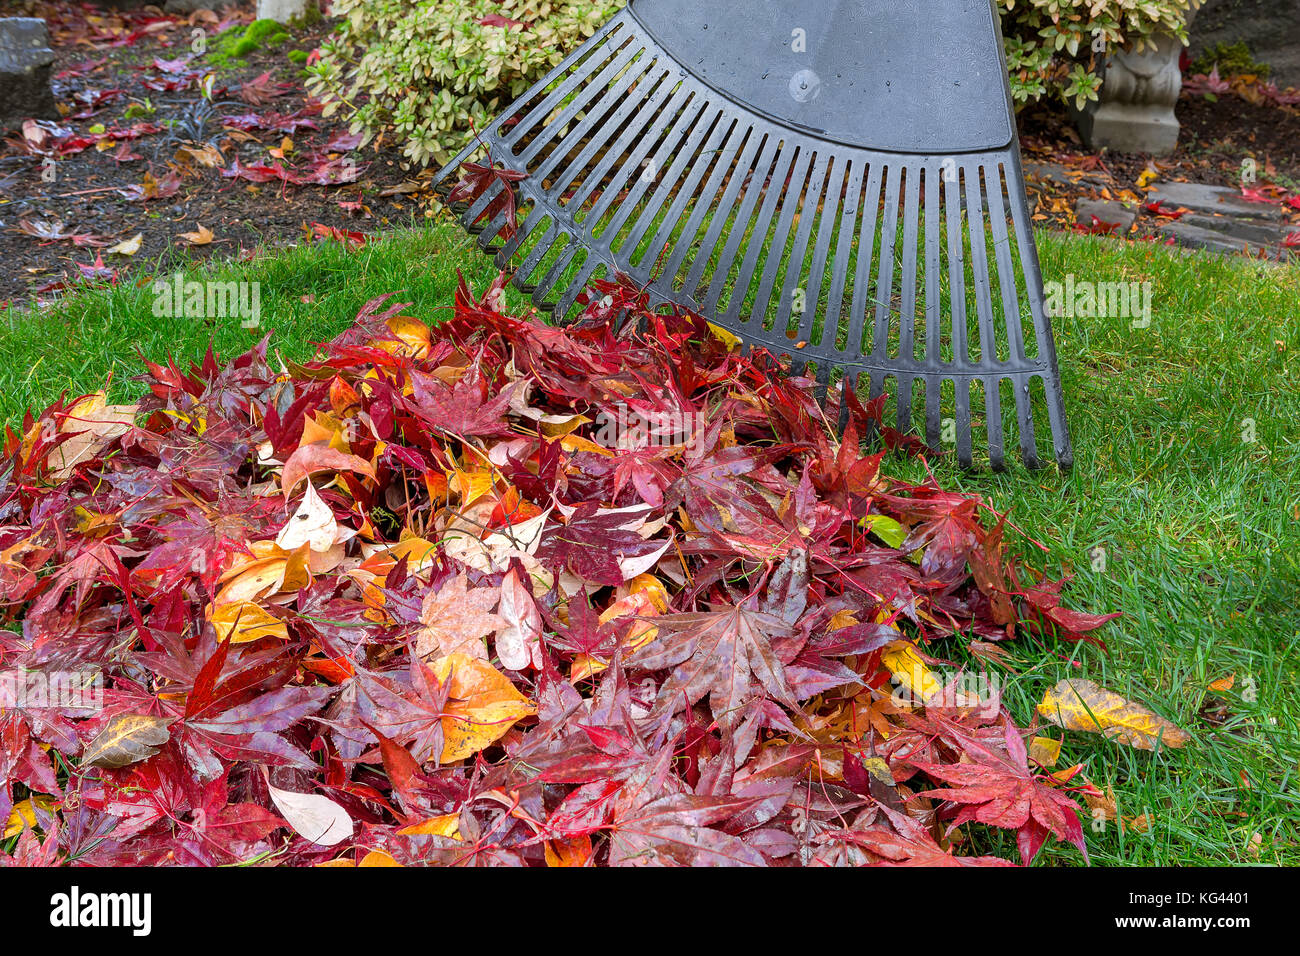 Raking red maple leaves fallen on green grass lawn in garden yard during autumn fall season Stock Photo